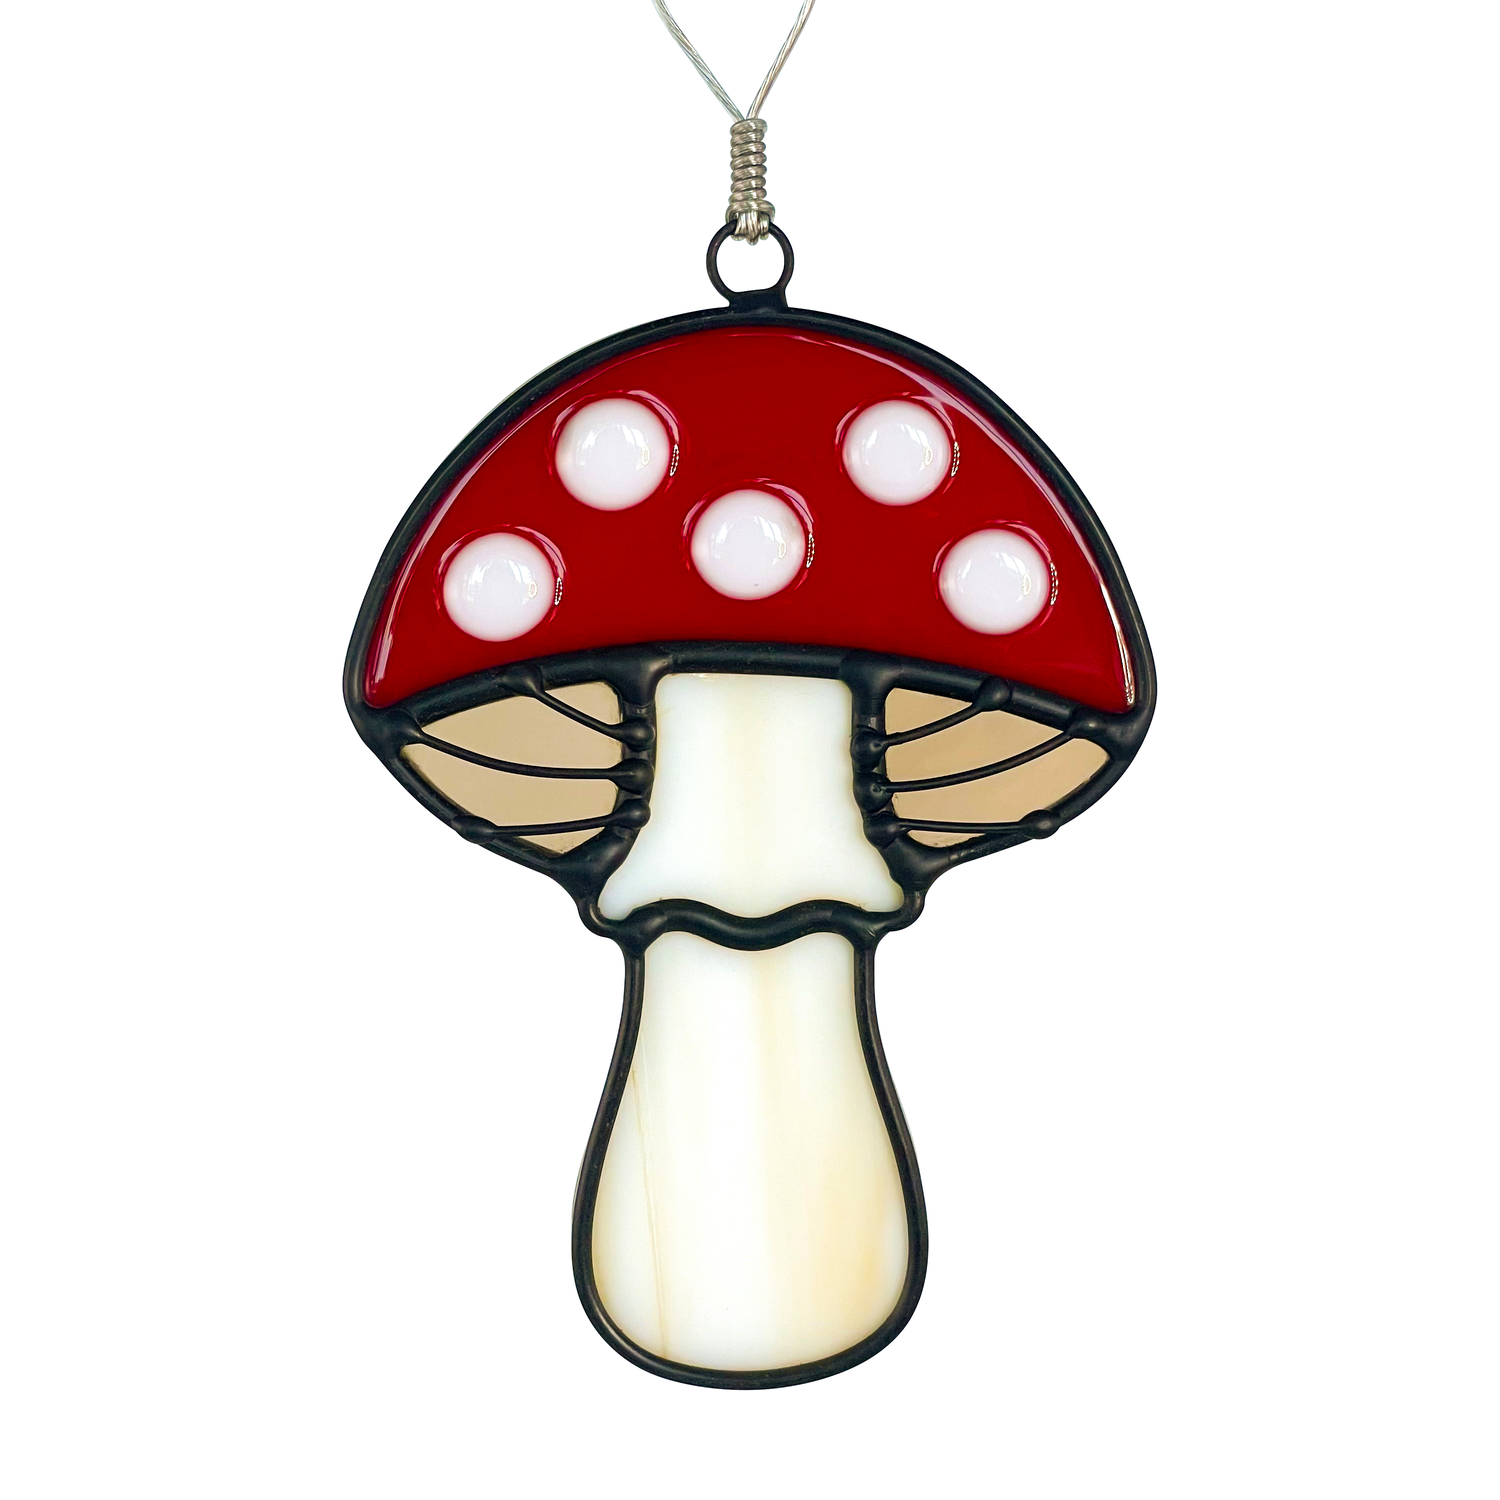 Mushroom Panel  Stained Glass Art — Glasswork Pixie